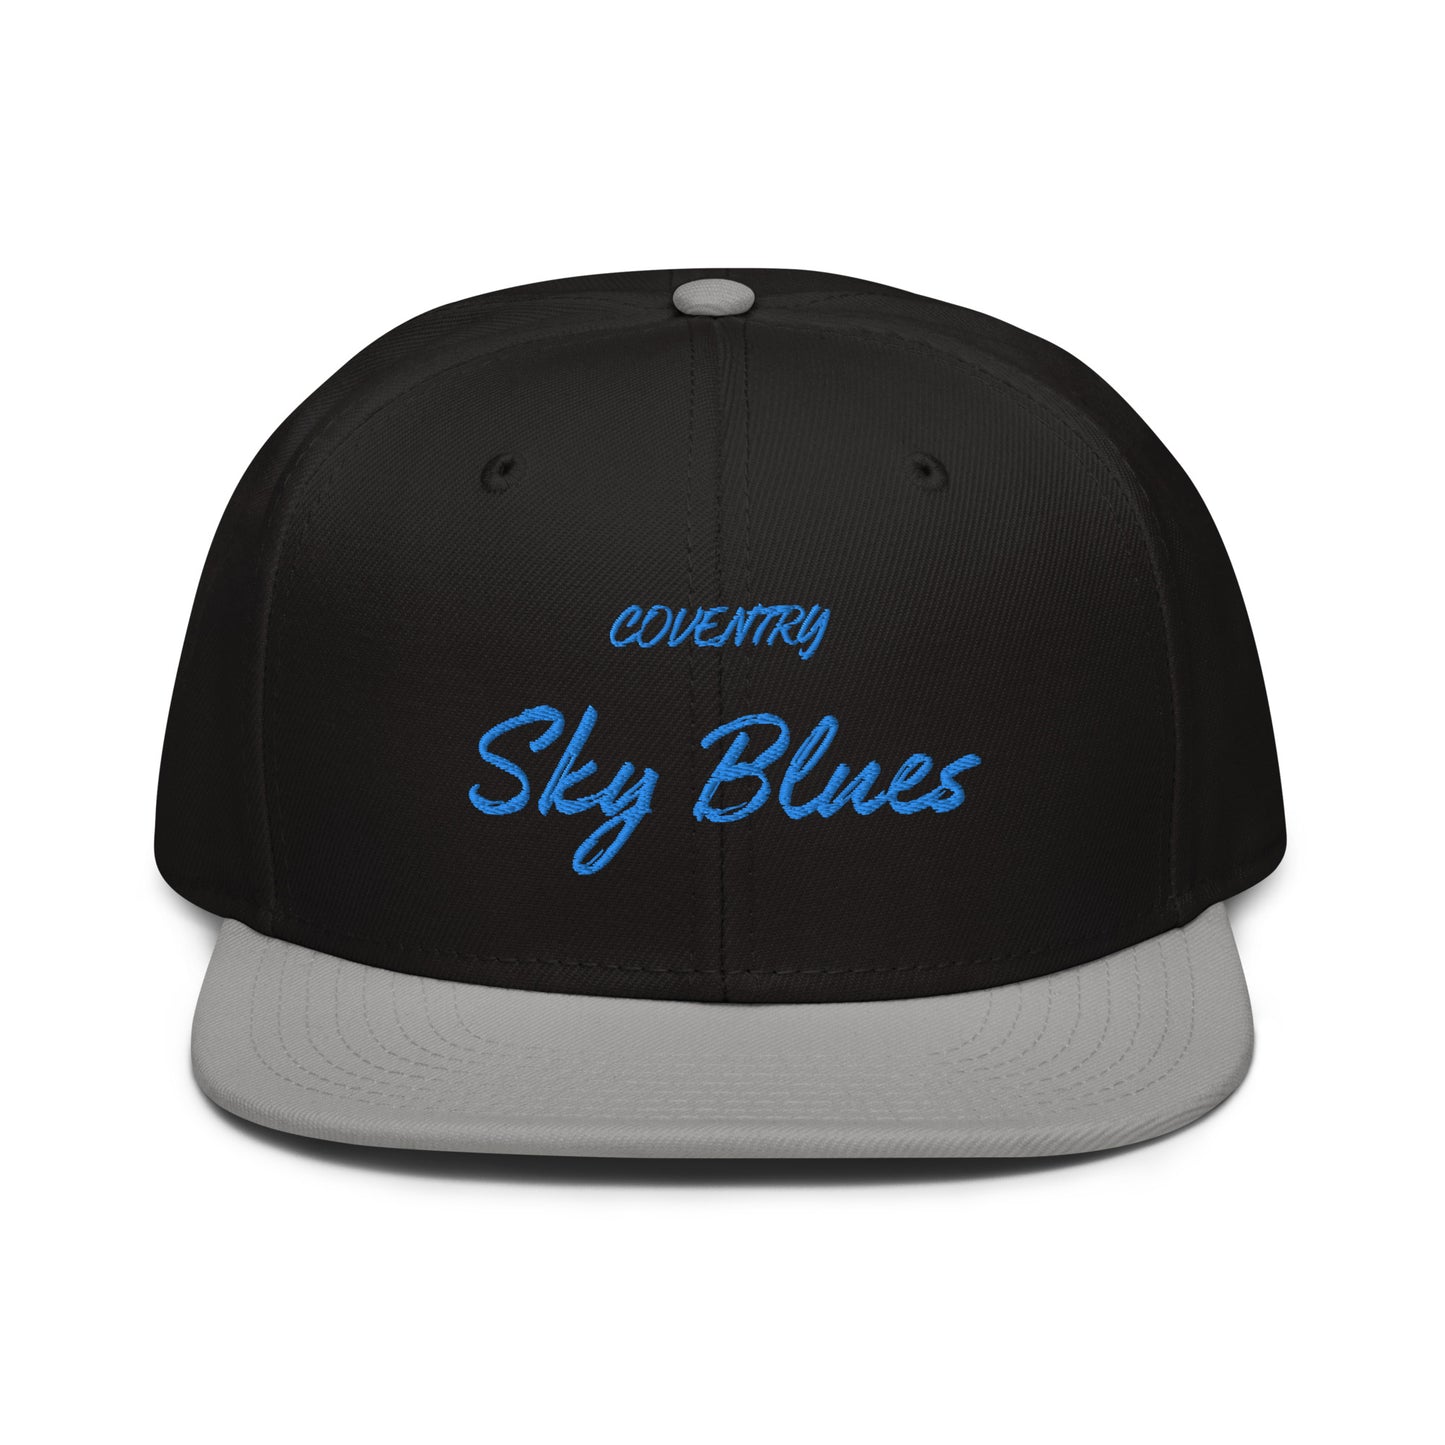 Coventry Sky Blues Snapback Hat